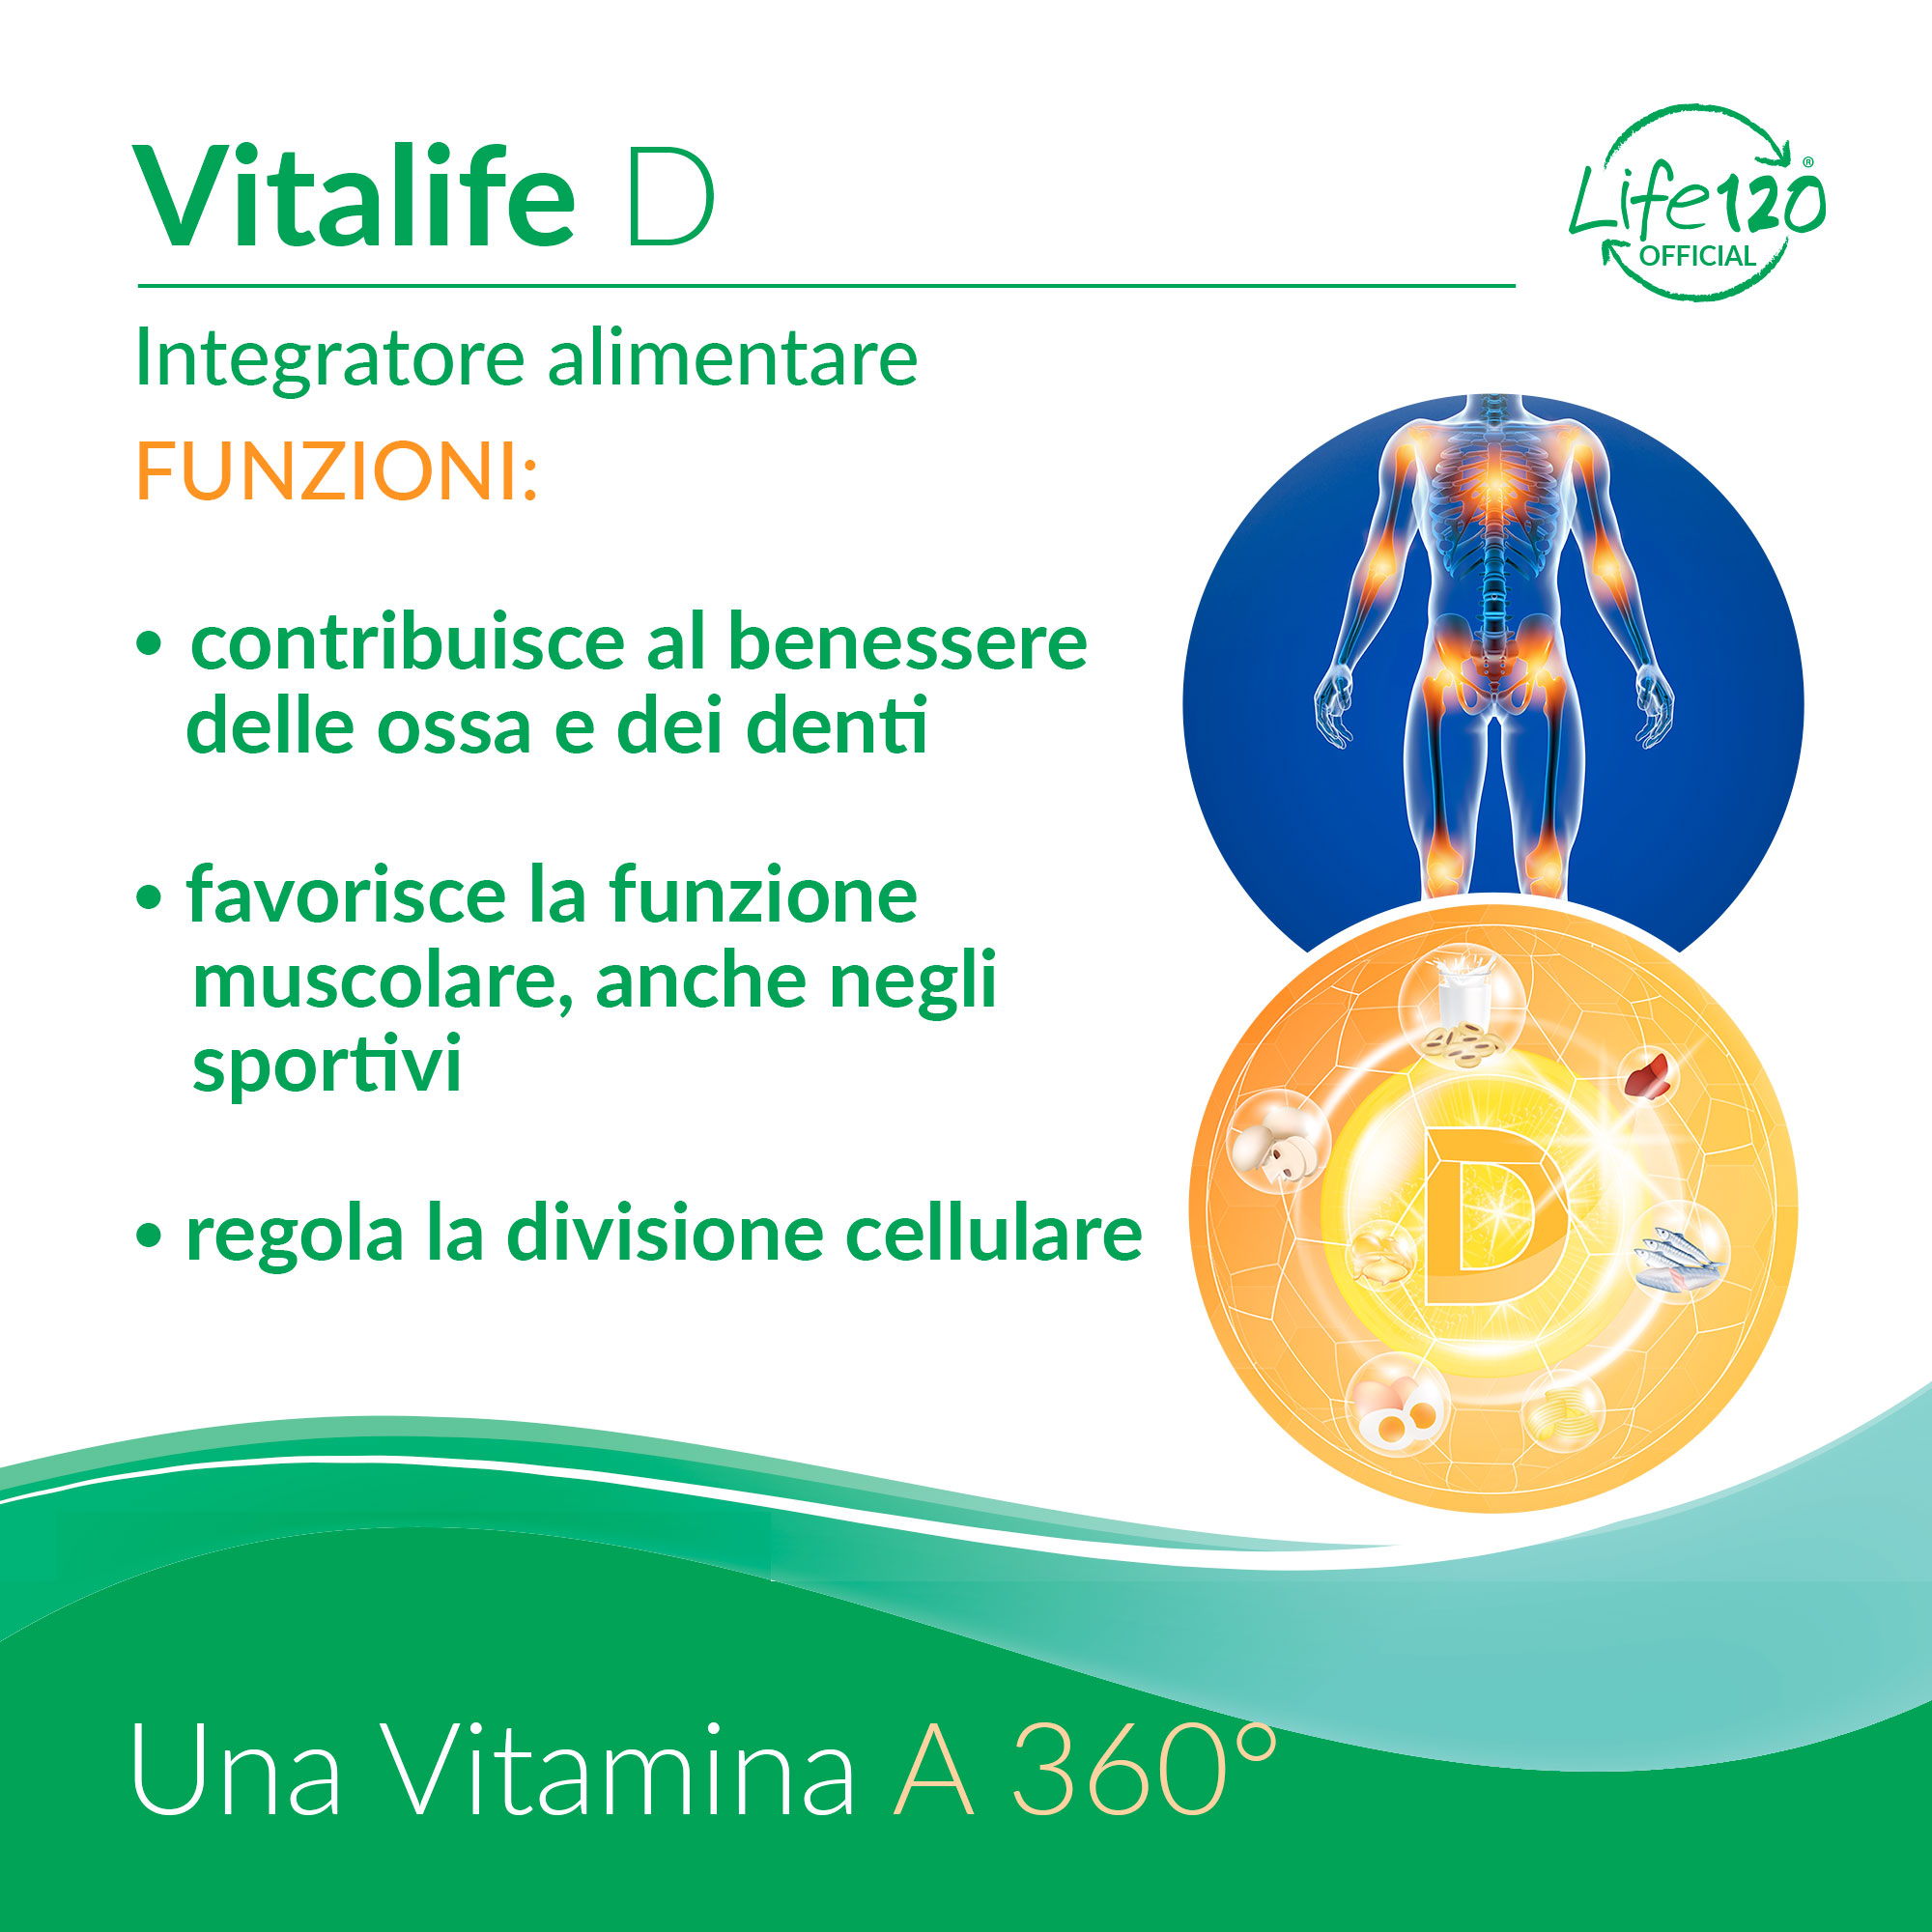 Vitalife D